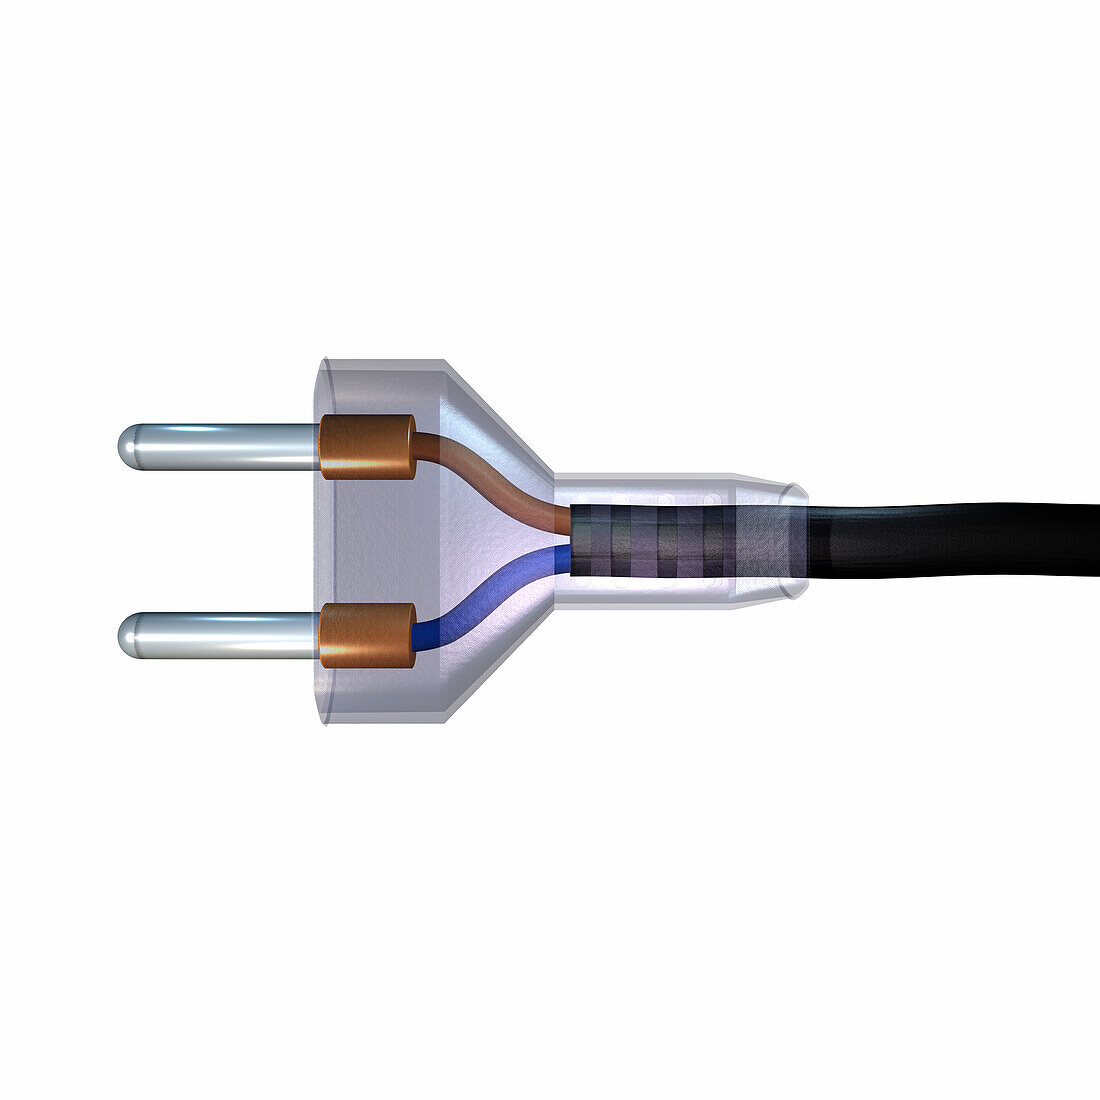 Two pin plug, illustration